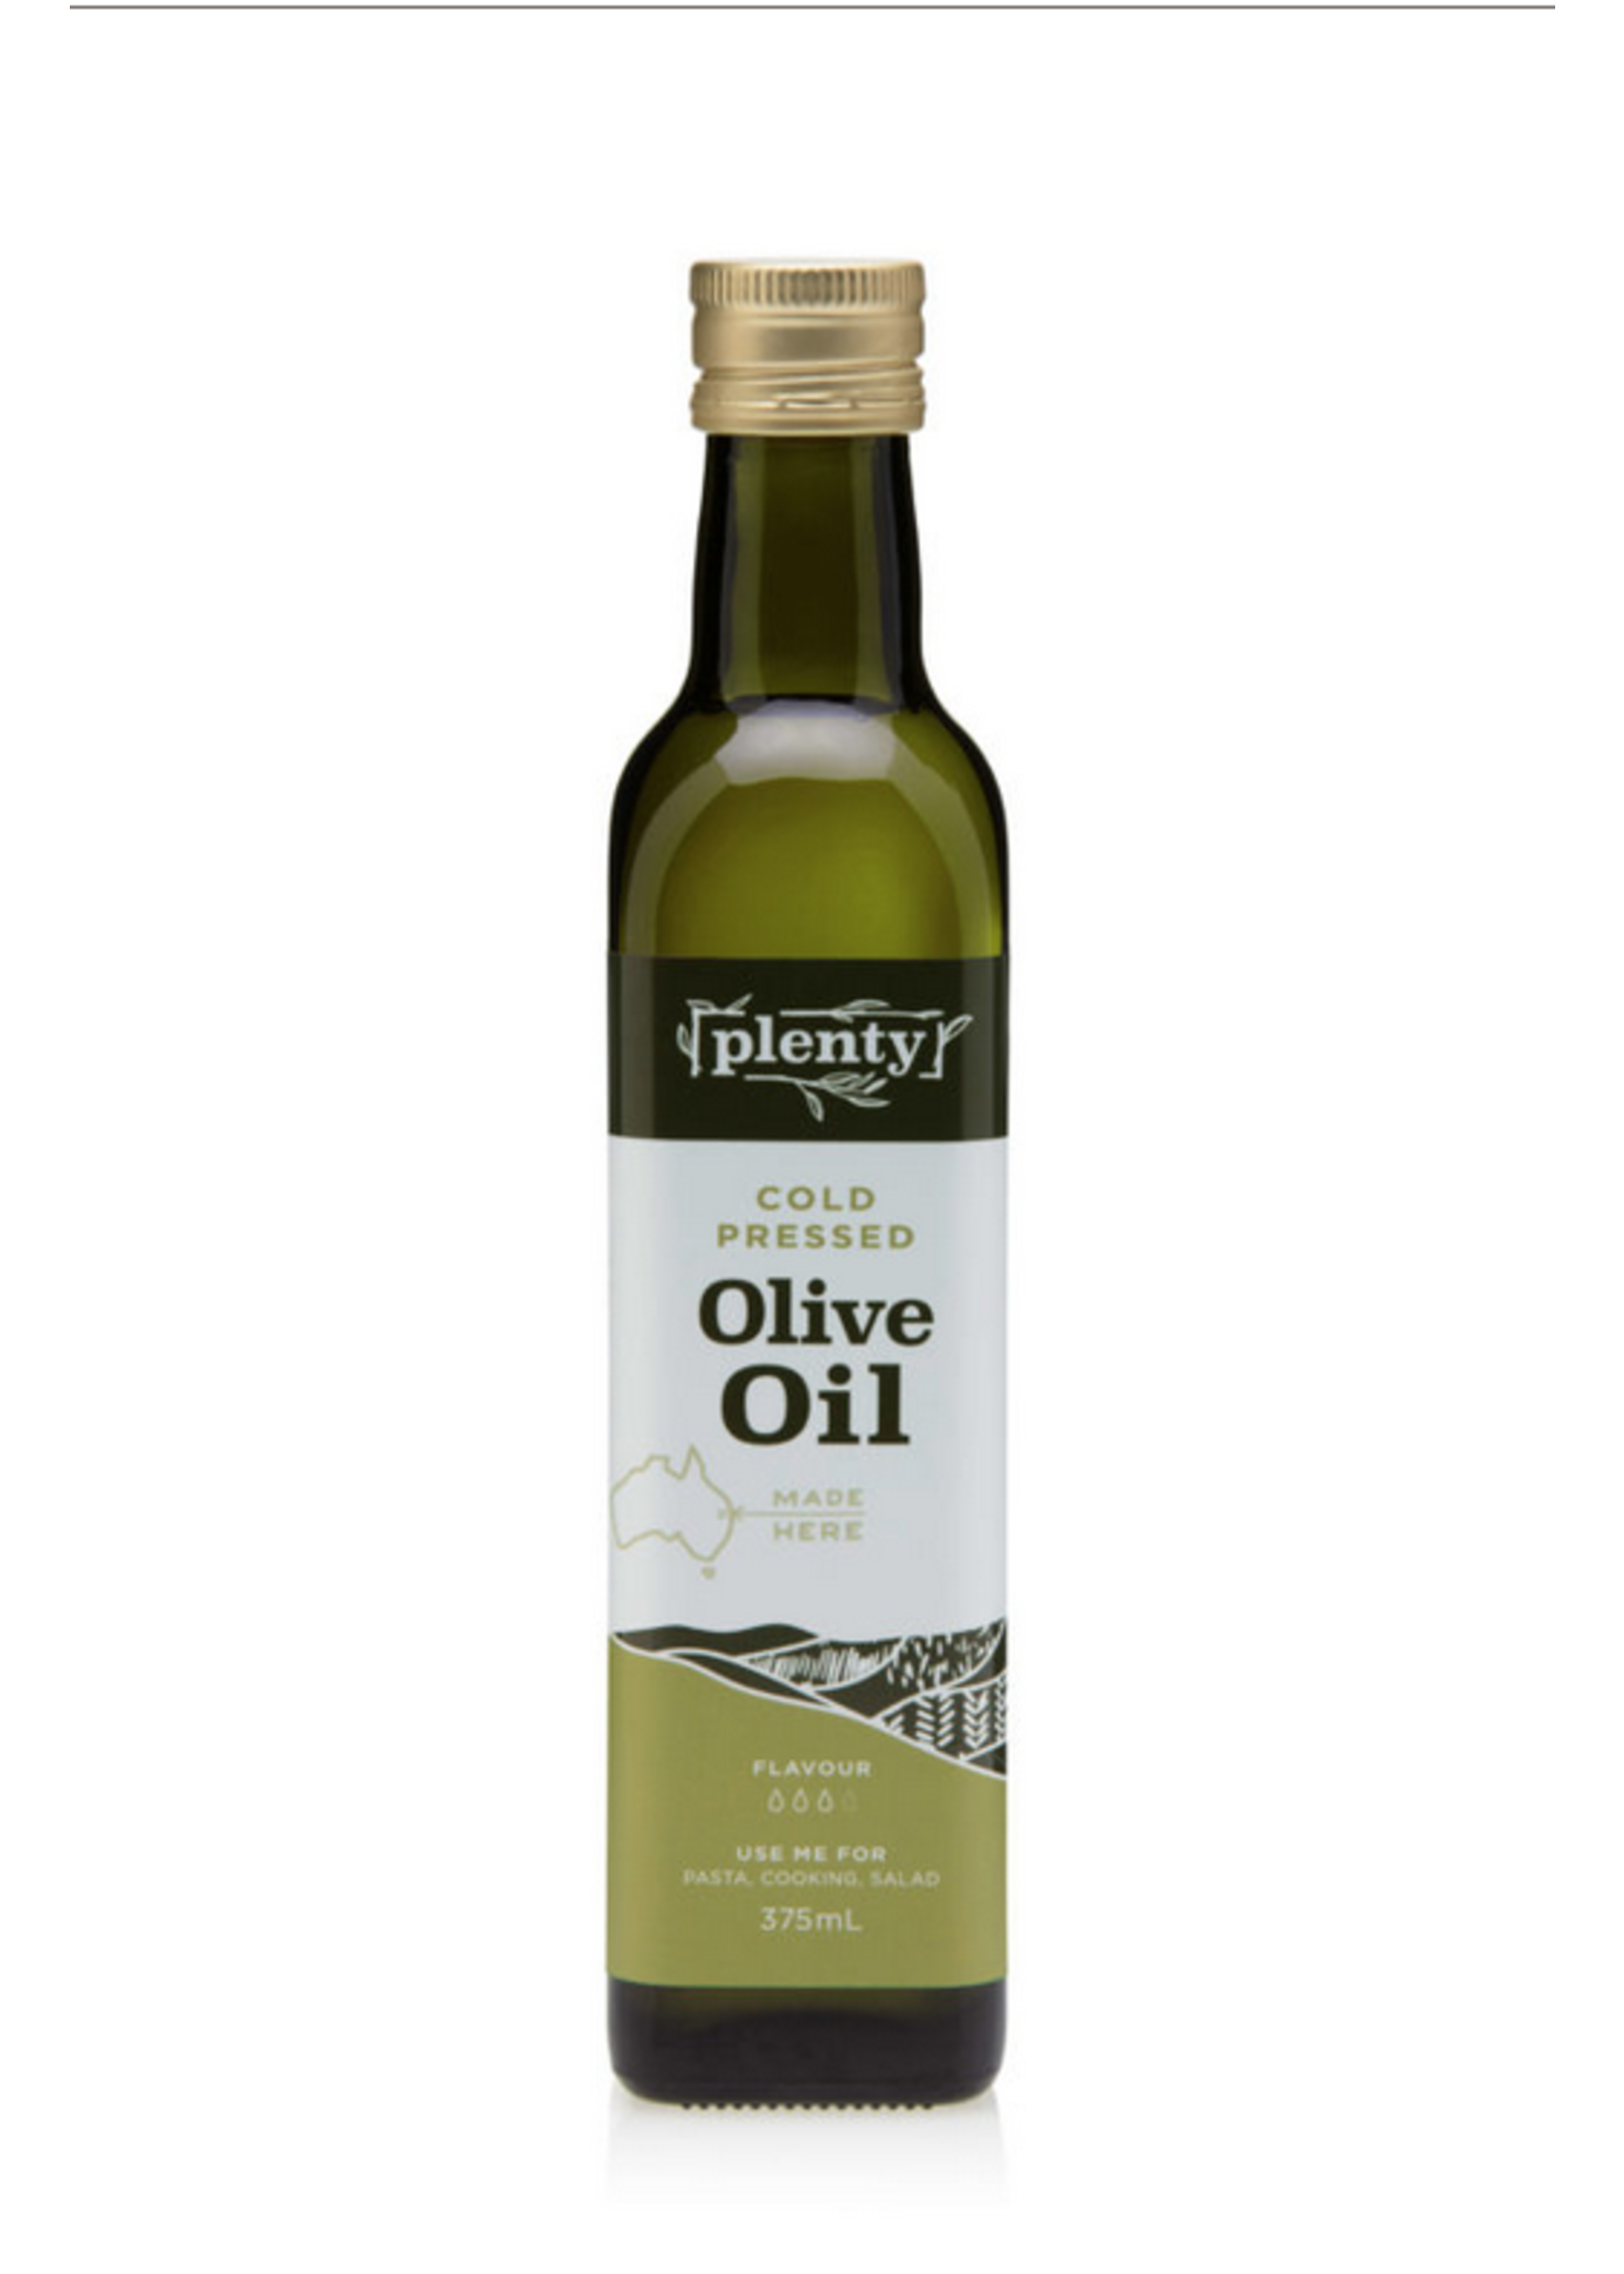 plentyfoods Plenty Cold Pressed Olive Oil 375ml